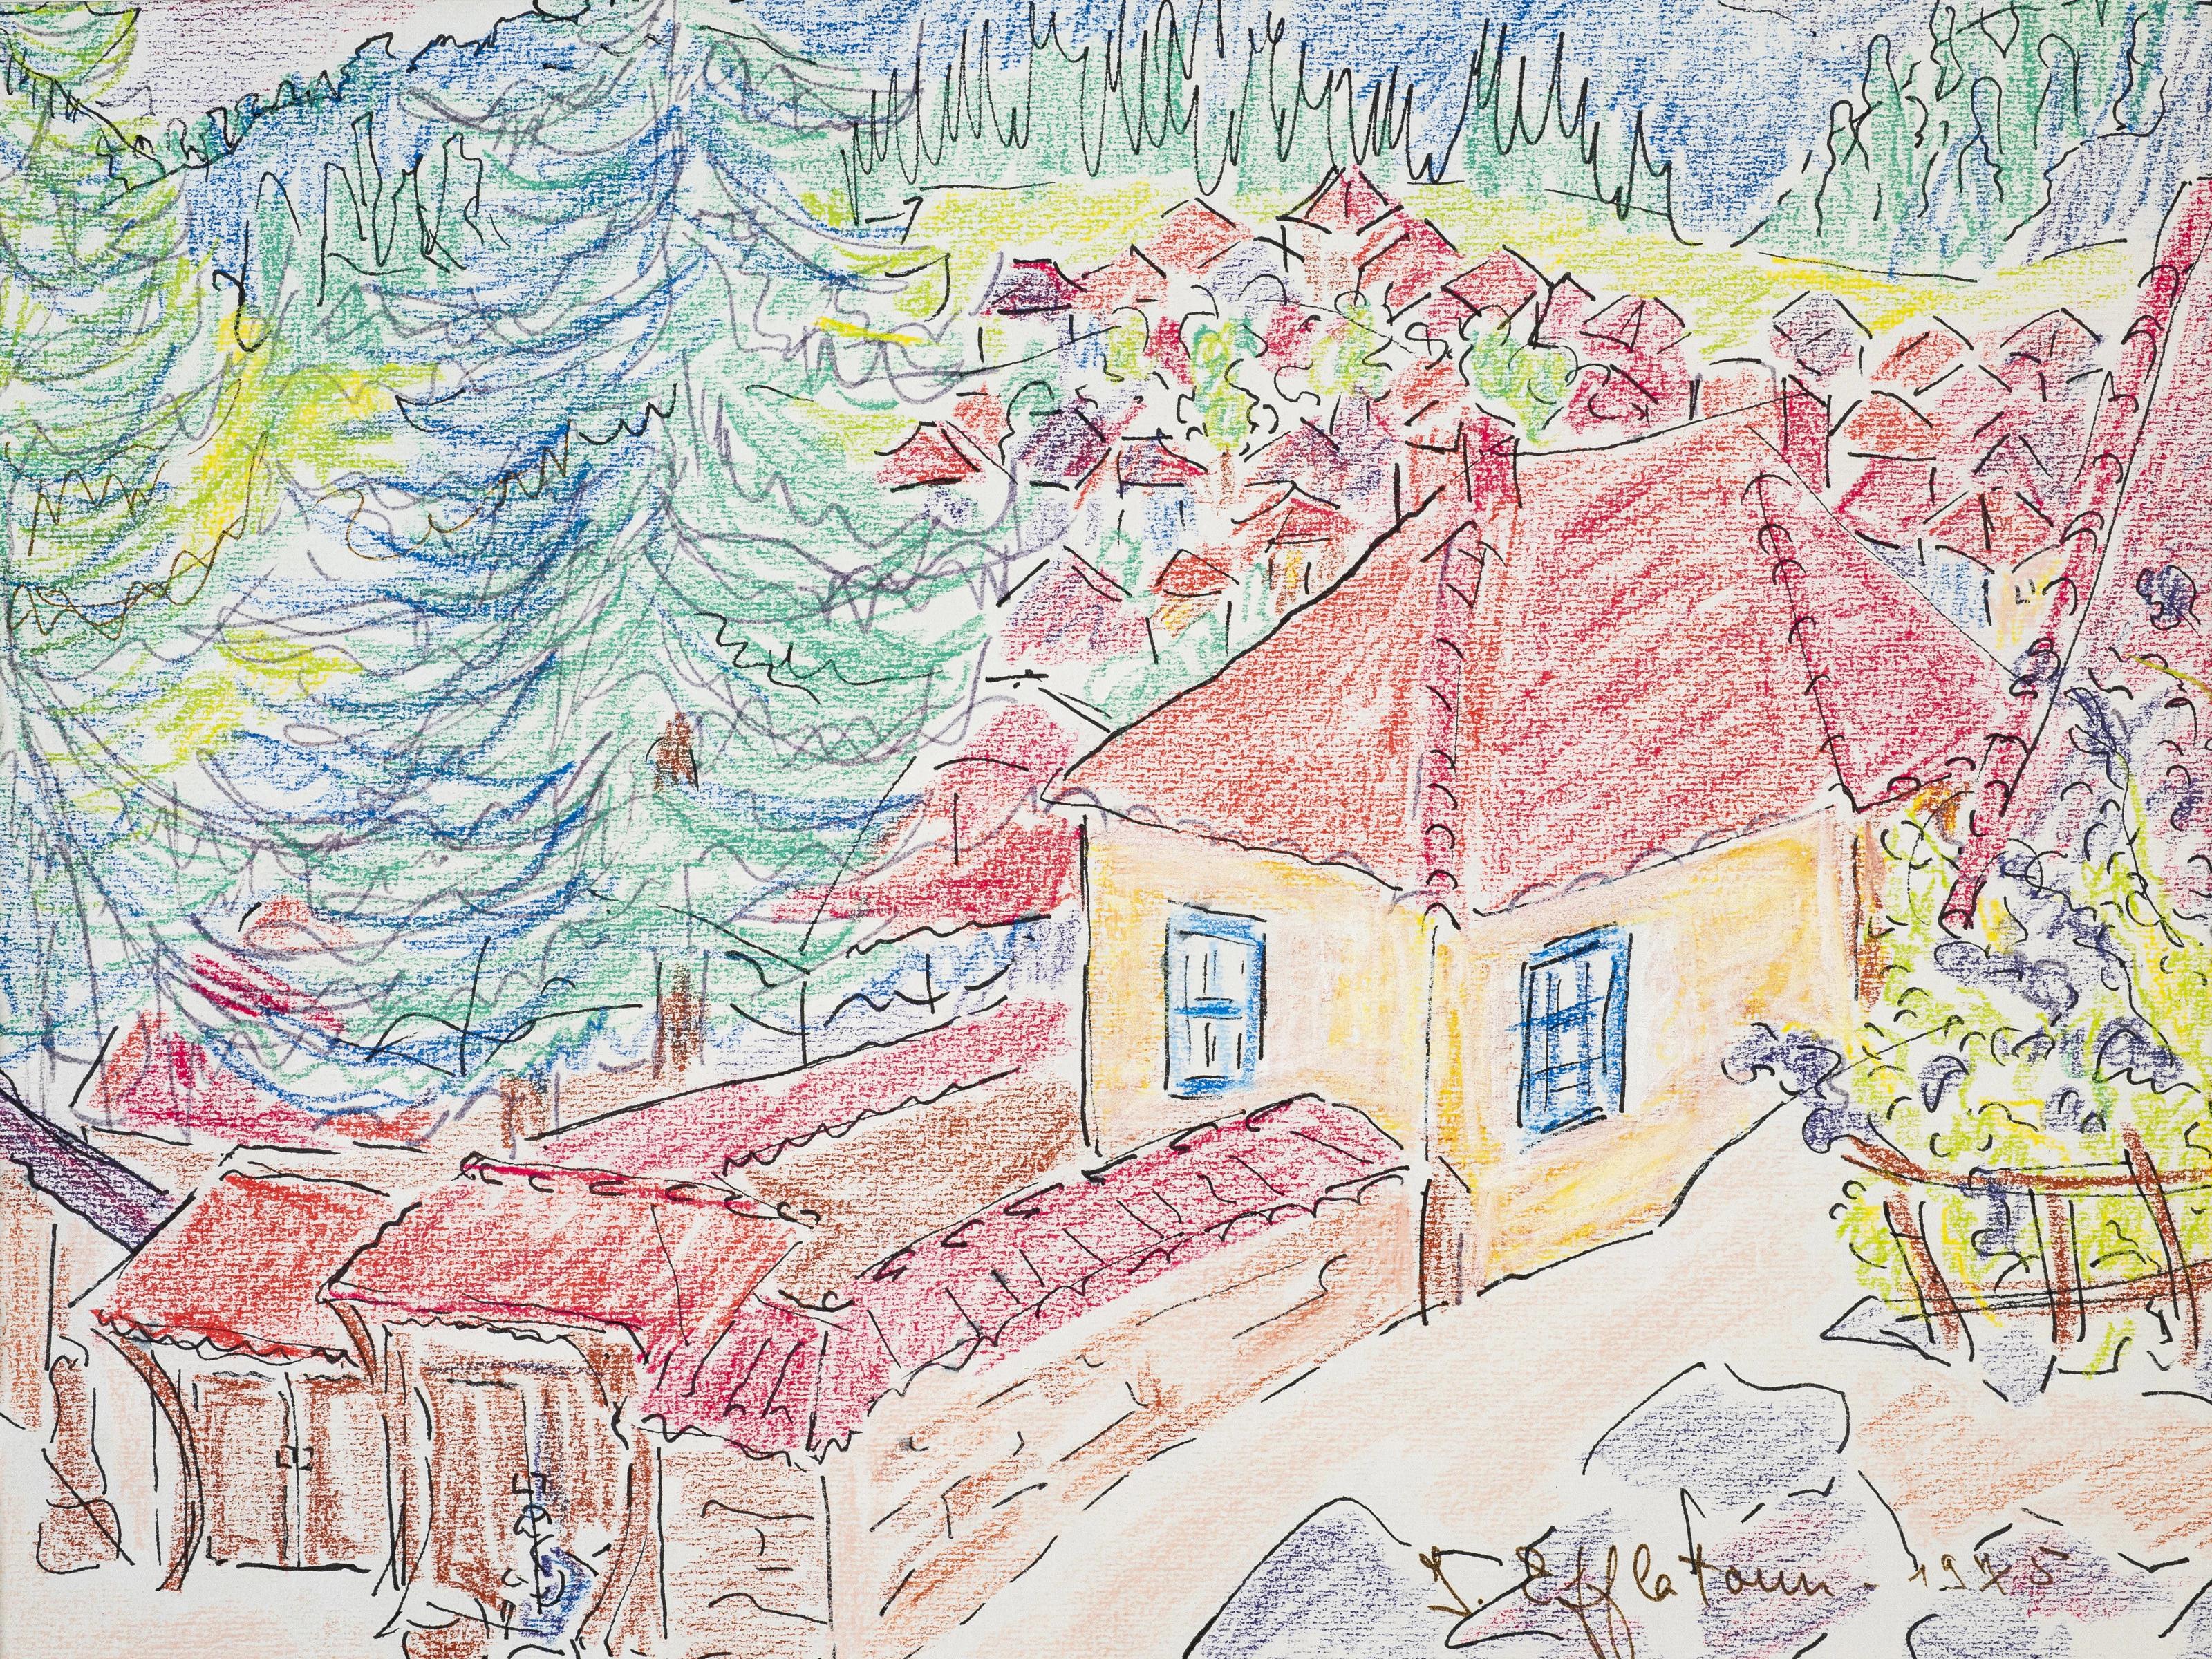 Inji EFFLATOUN Figurative Painting - "Alpine Village I" Pastel on Paper Painting 10" x 12" in by Inji Efflatoun